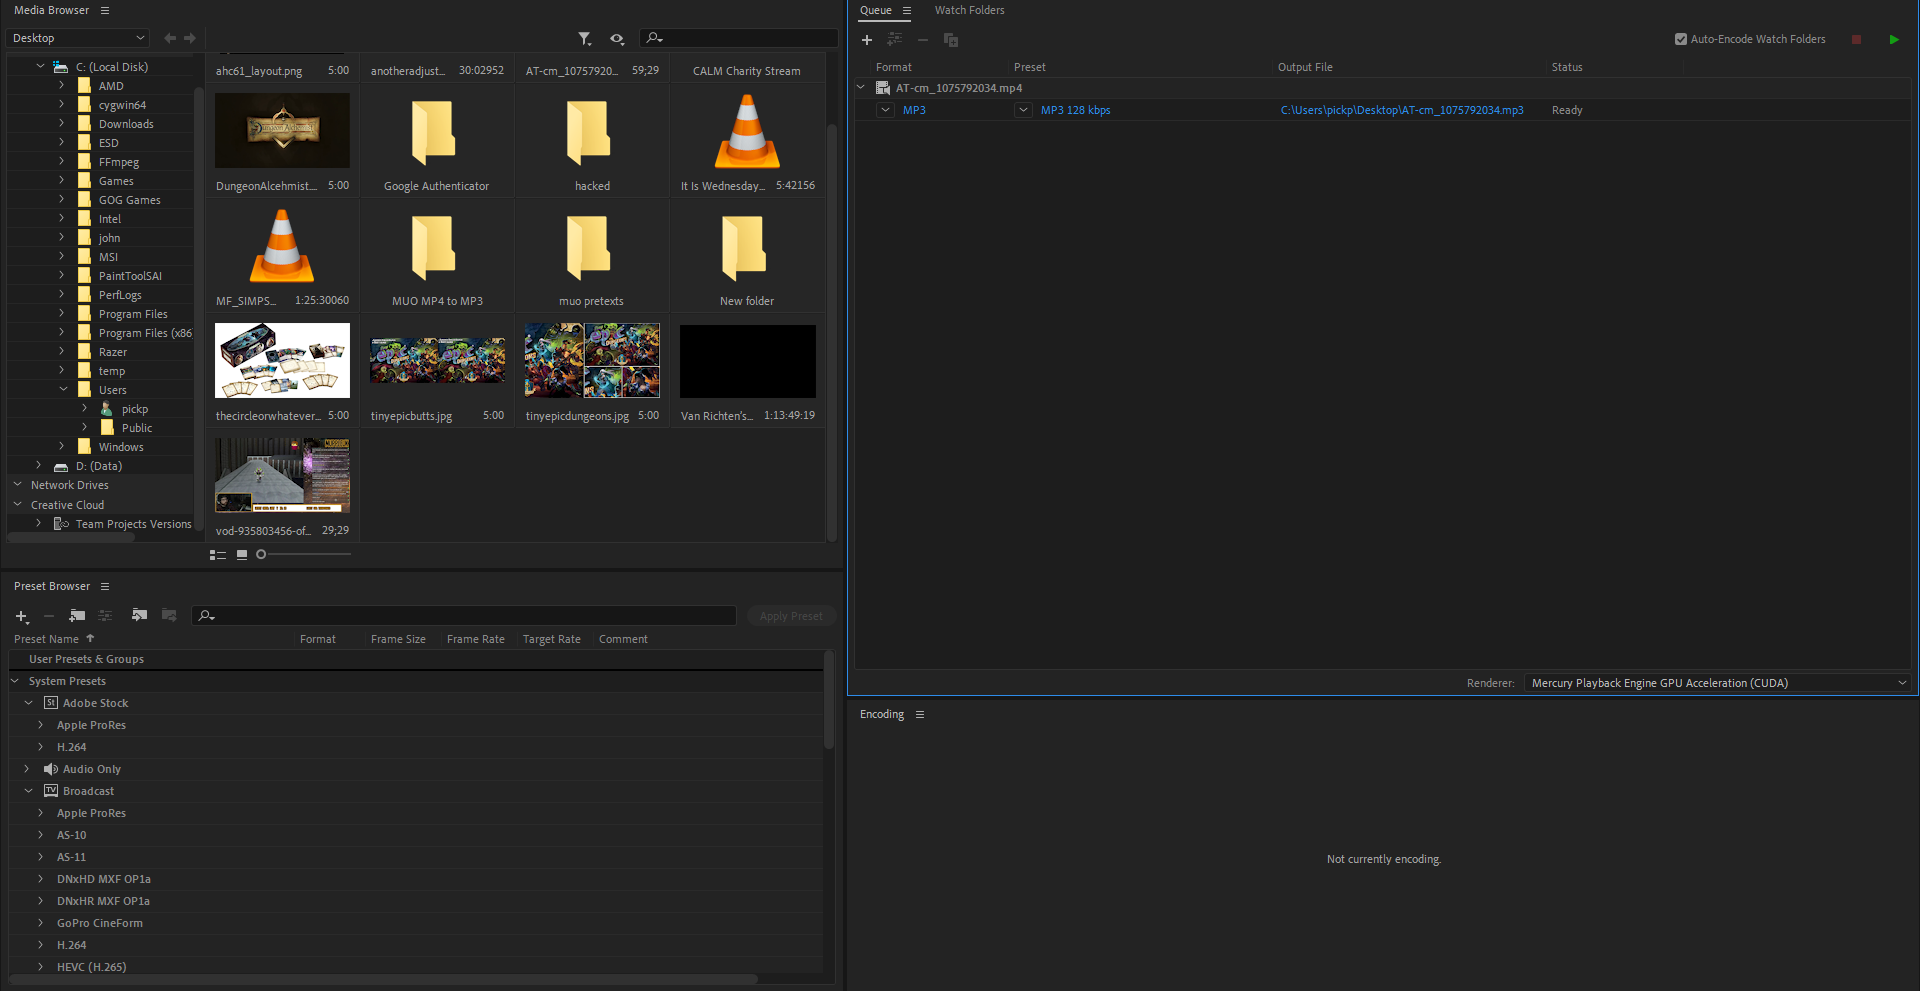 Adobe Media Encoder Screenshot